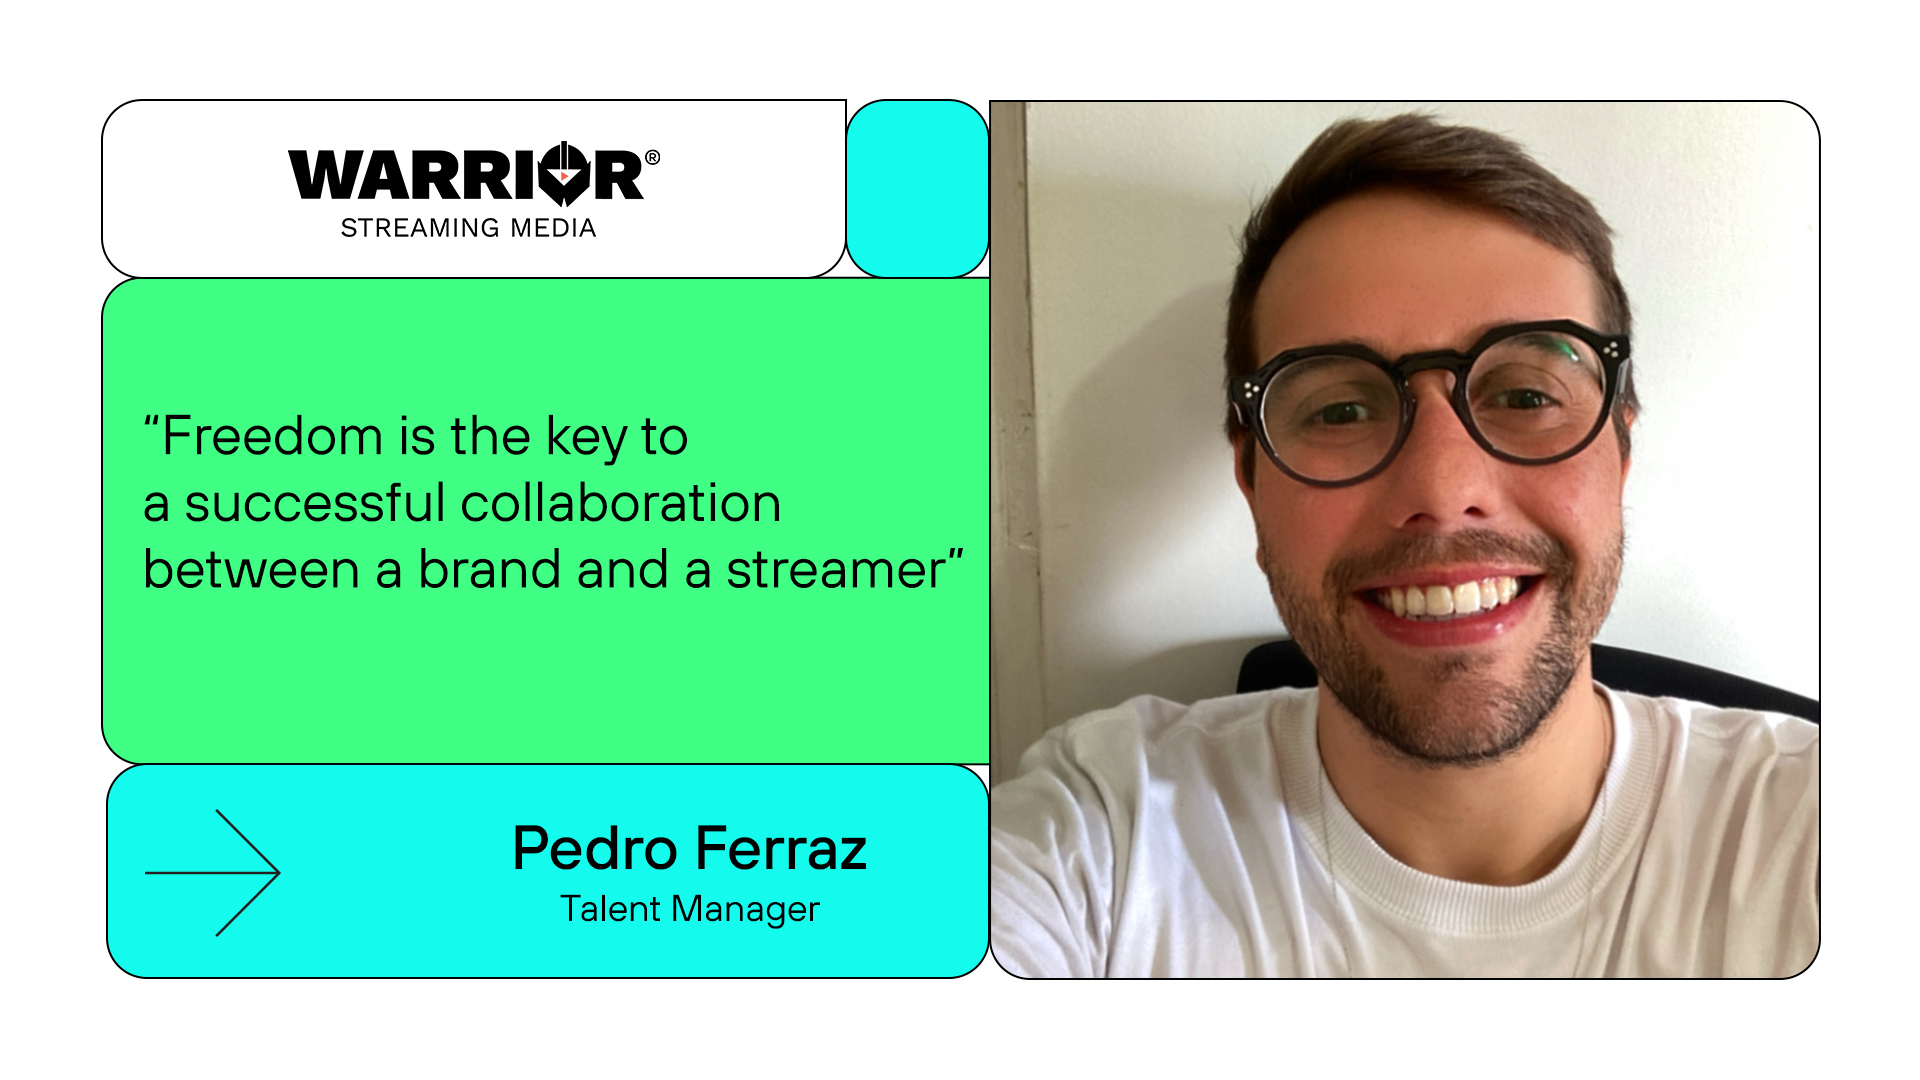 Streamer managers around the world | Pedro Ferraz - WARRIOR